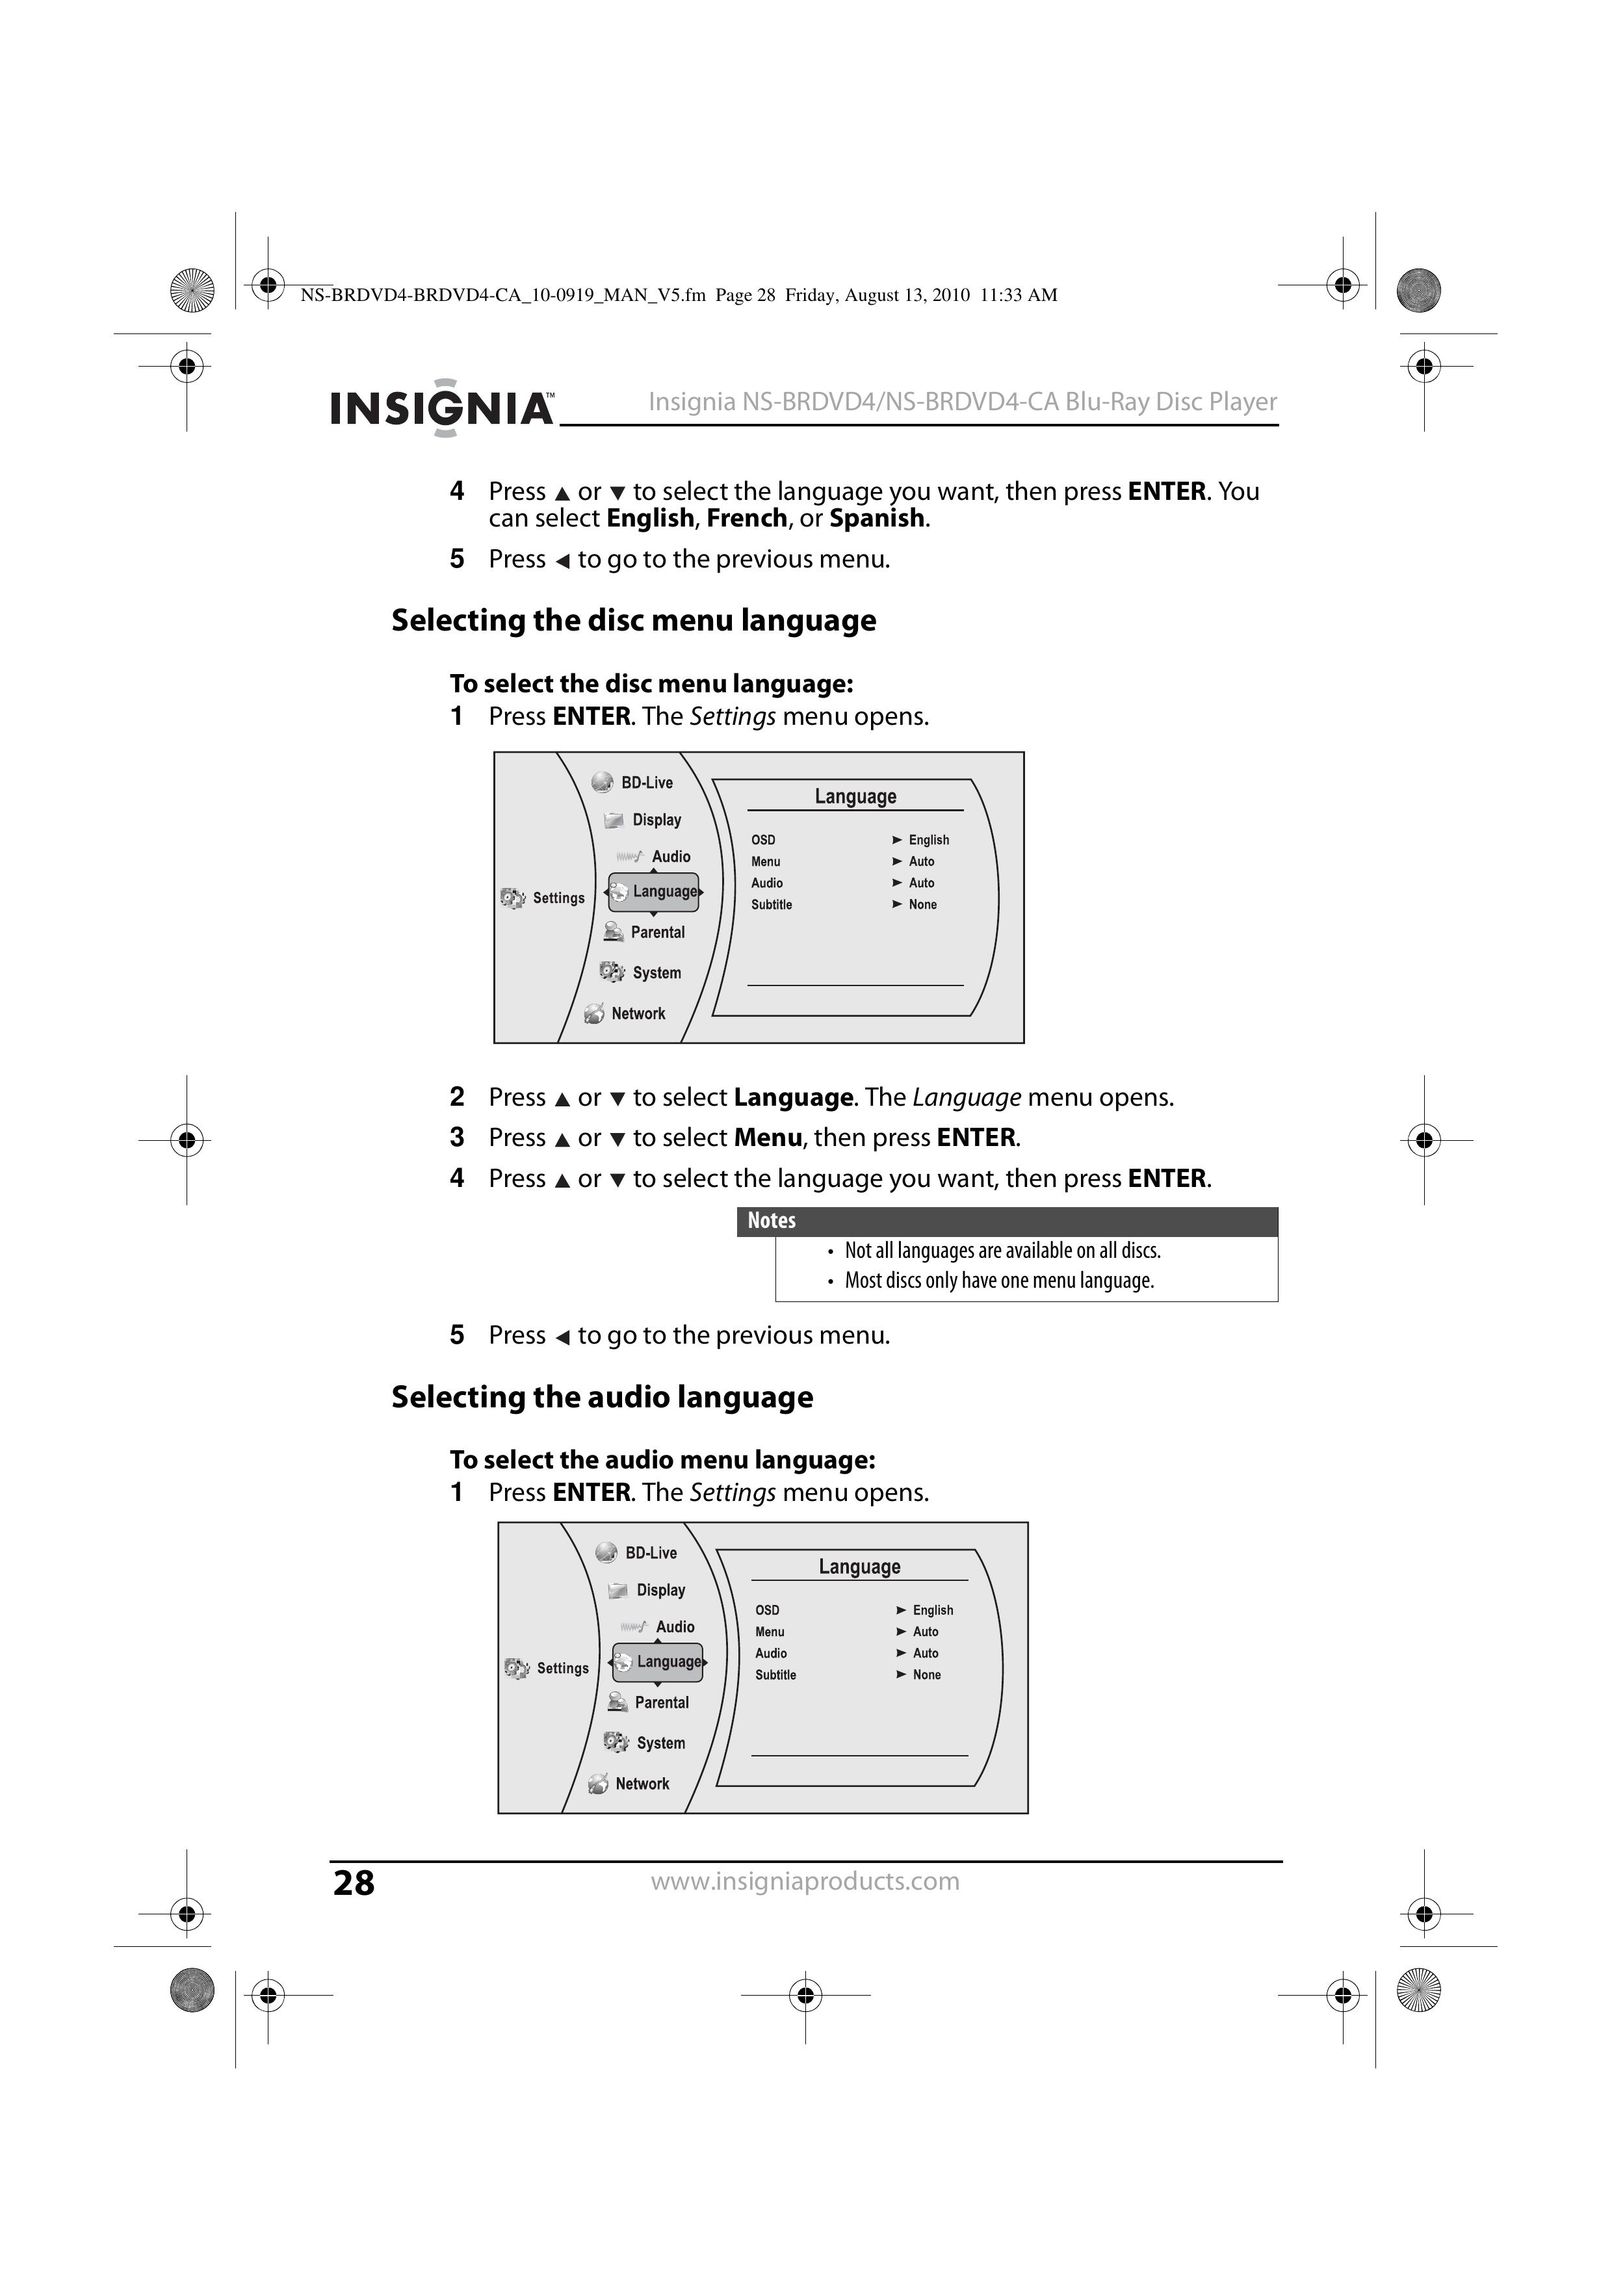 Insignia NS-BRDVD4 Blu-ray Player User Manual (Page 28)